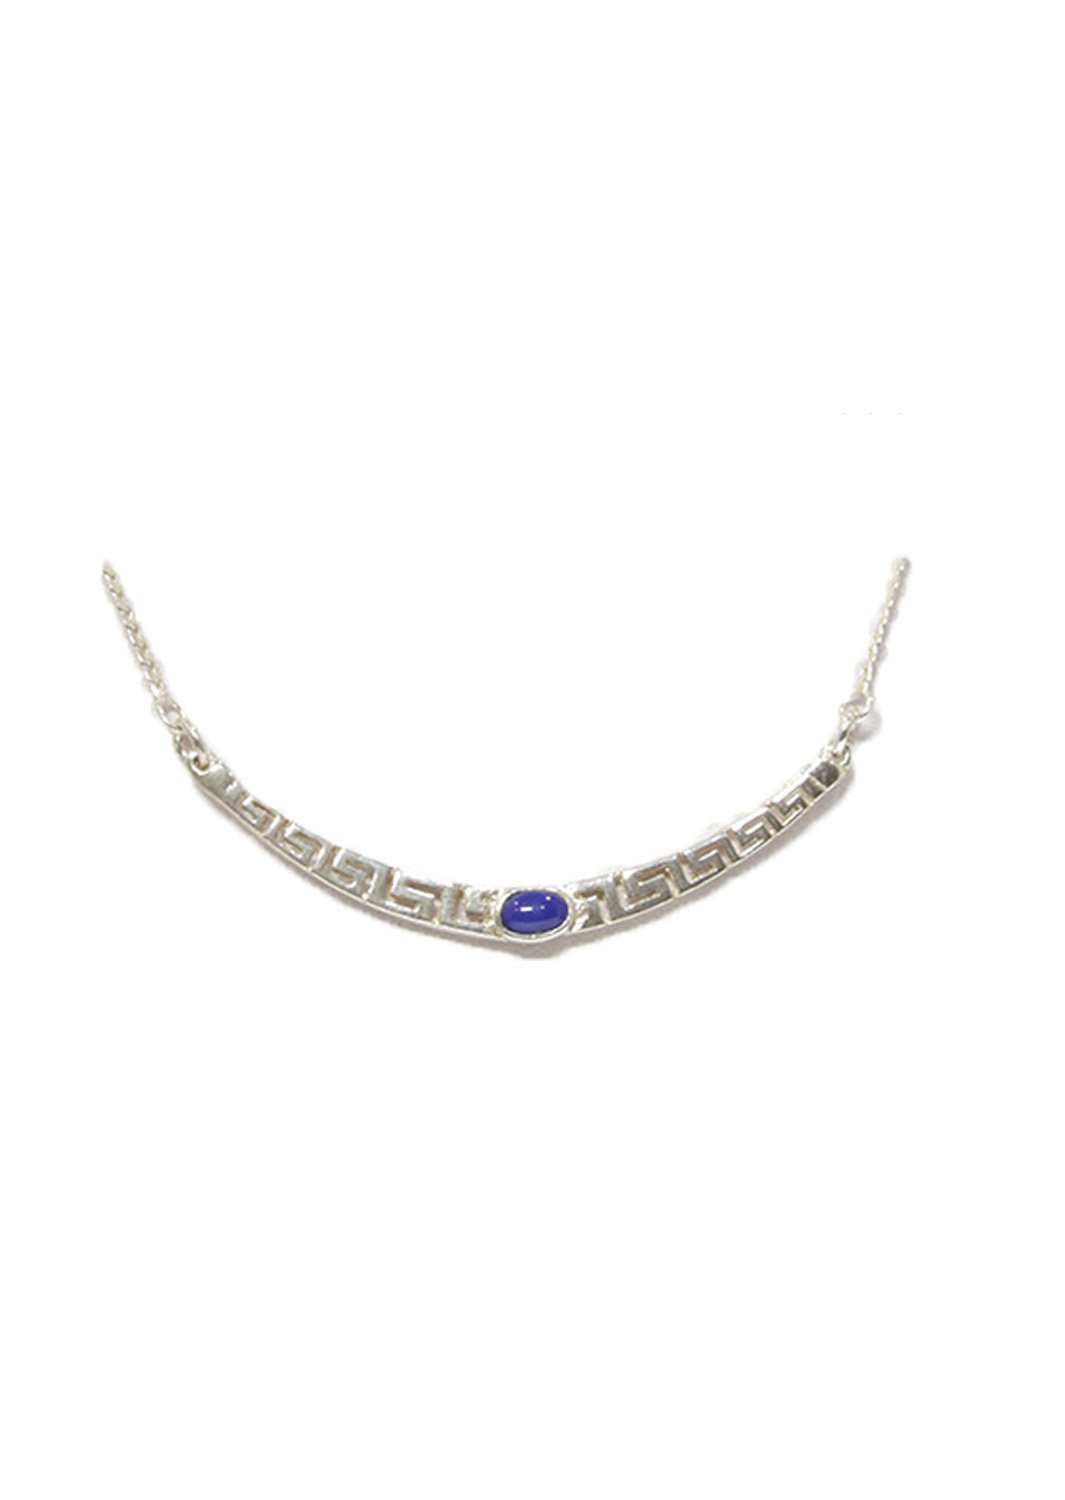 Greek key design - meander silver necklace with lapis lazuli